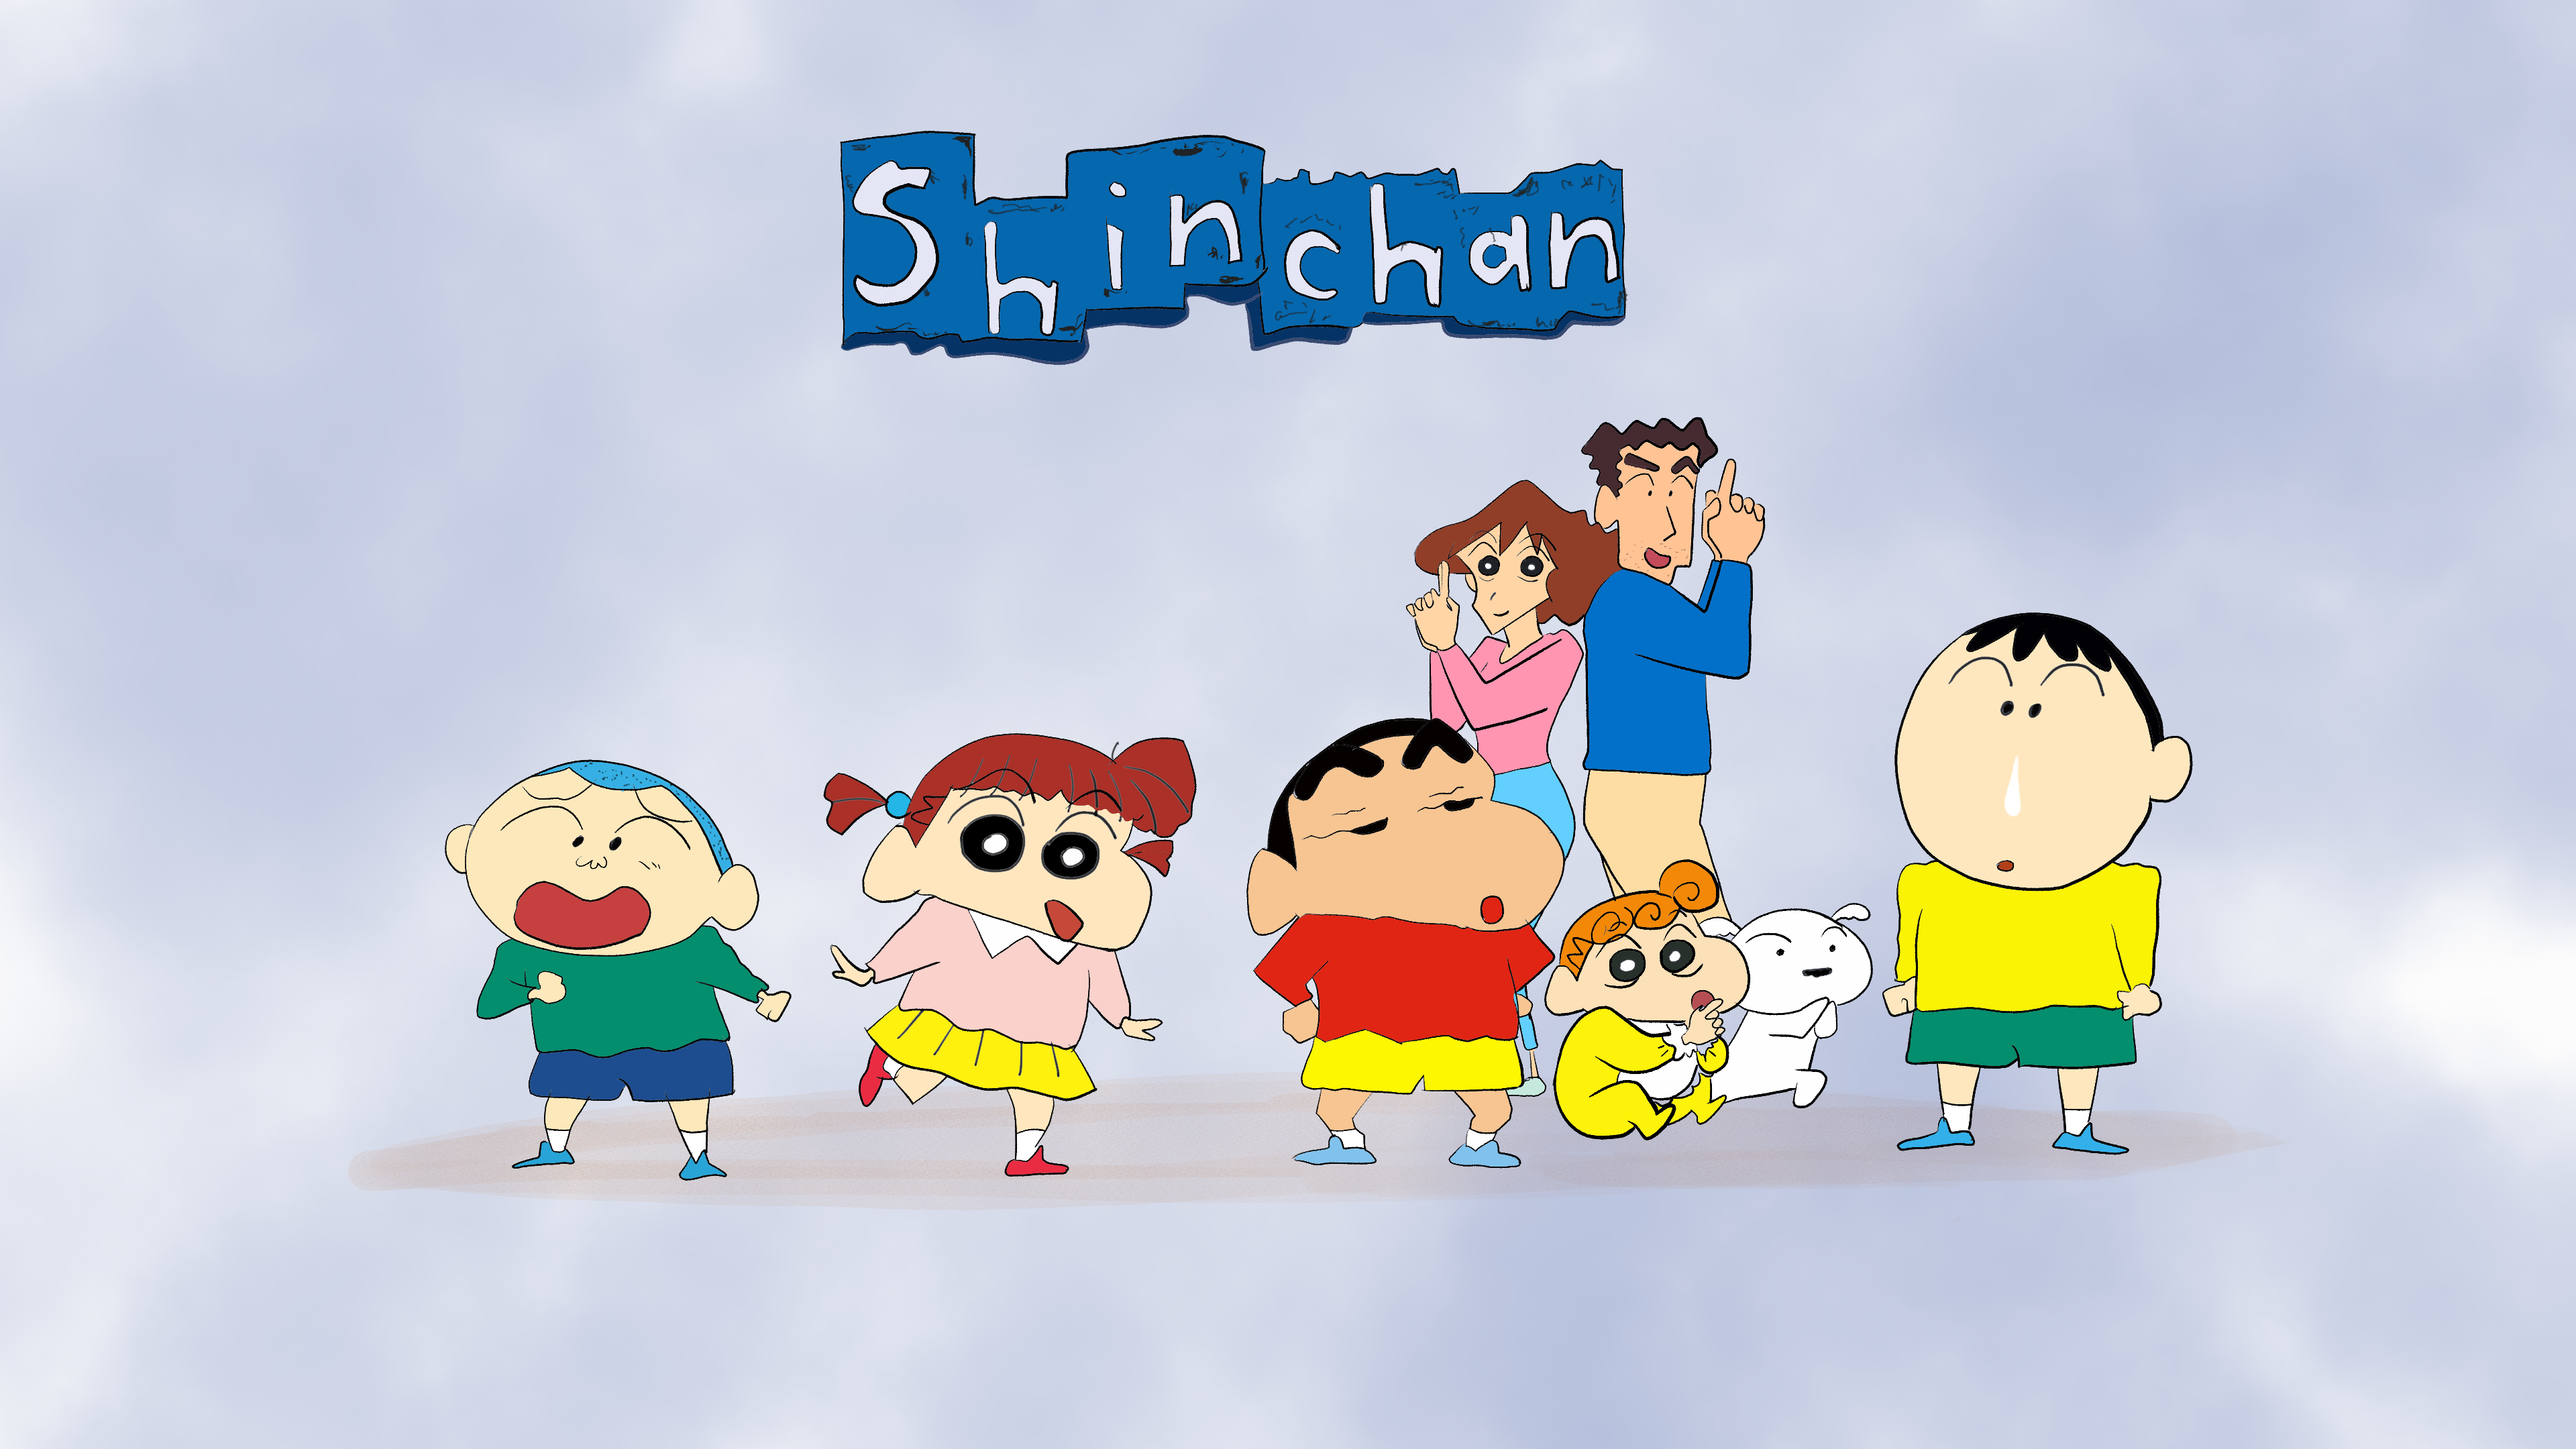 Shinchan GIFs | GIFDB.com